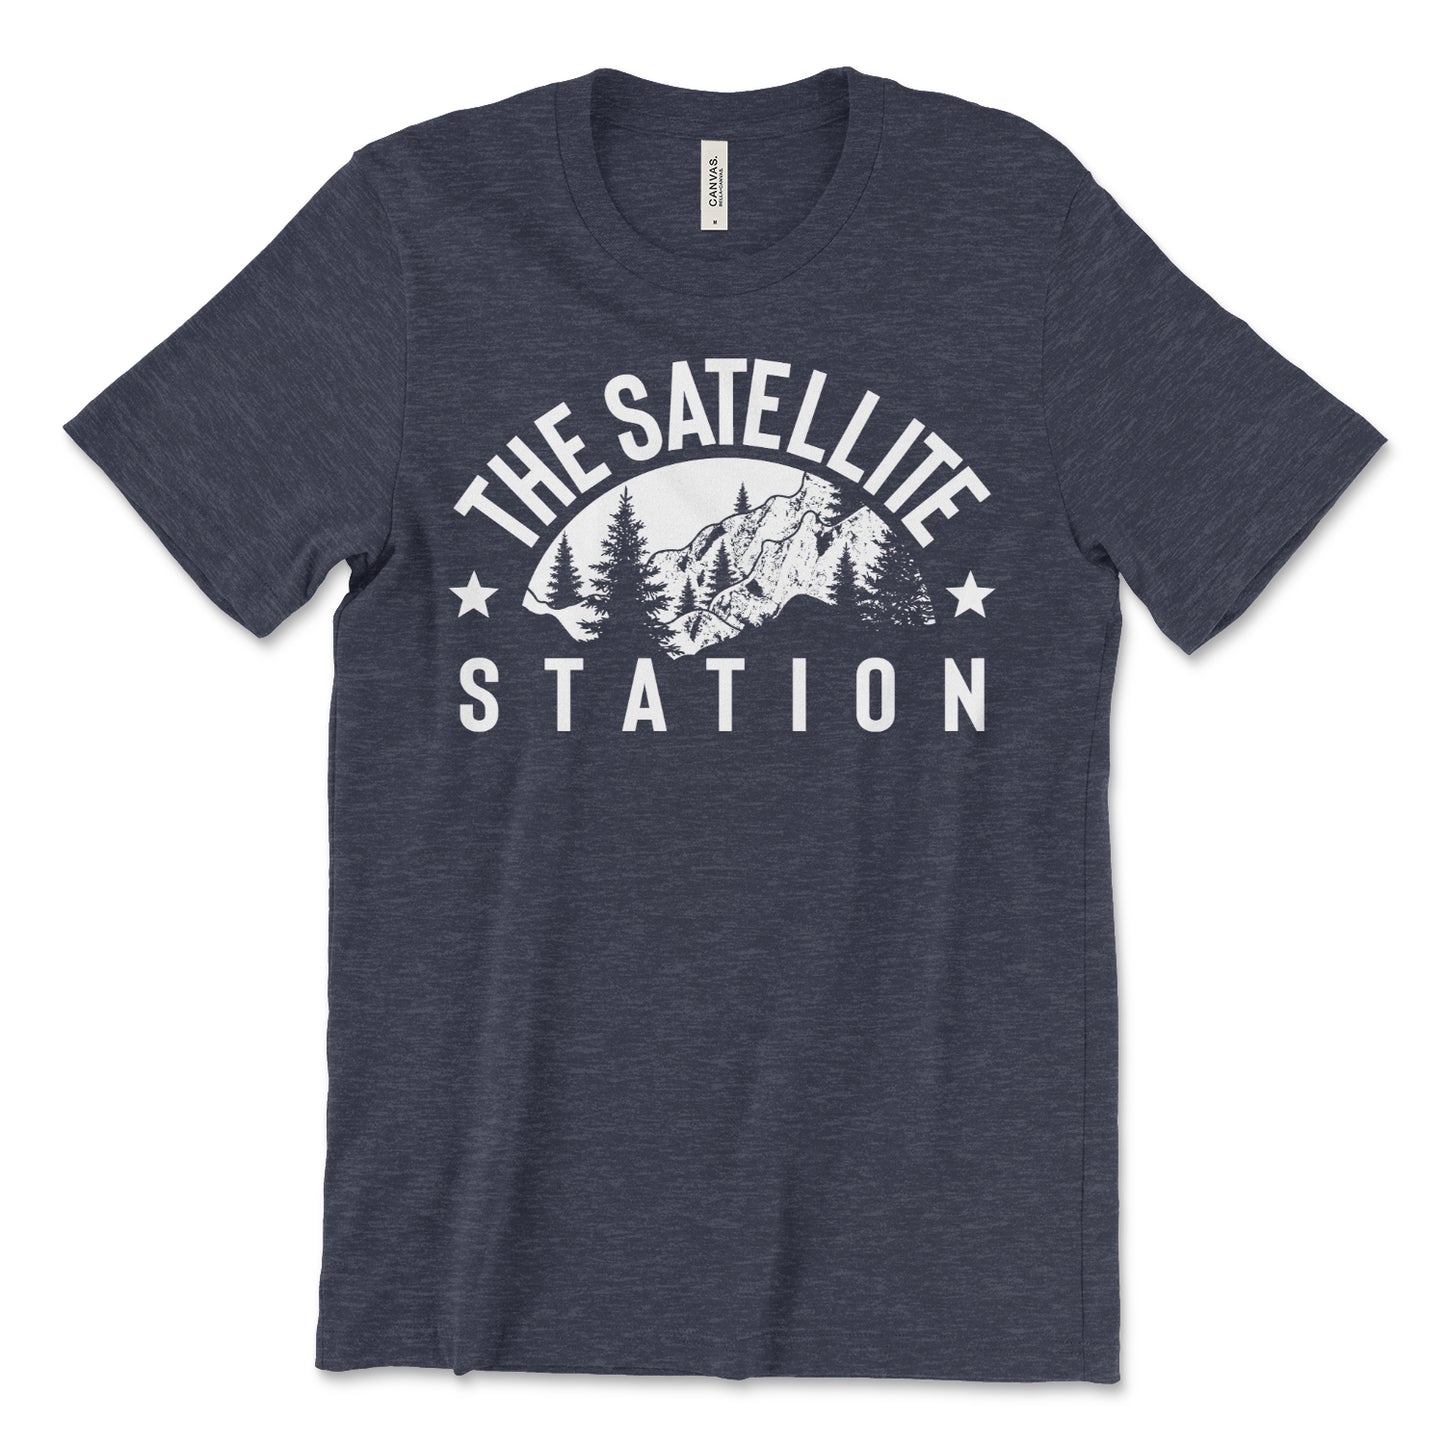 The Satellite Station "Mountain" Short-Sleeve Unisex T-Shirt